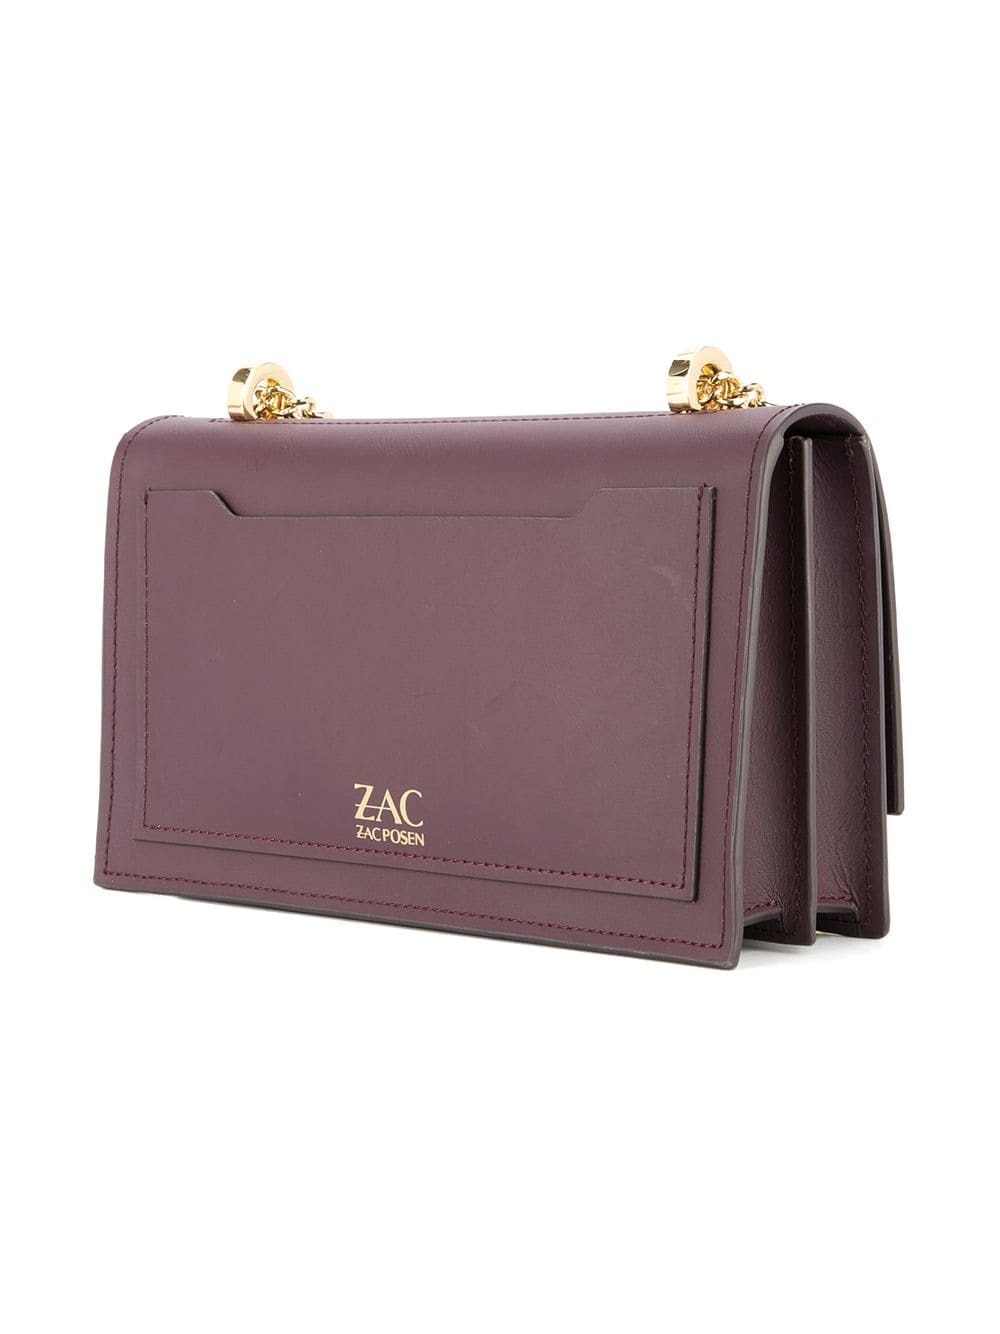 Zac Zac Posen Earthette Chain Shoulder Bag, $345